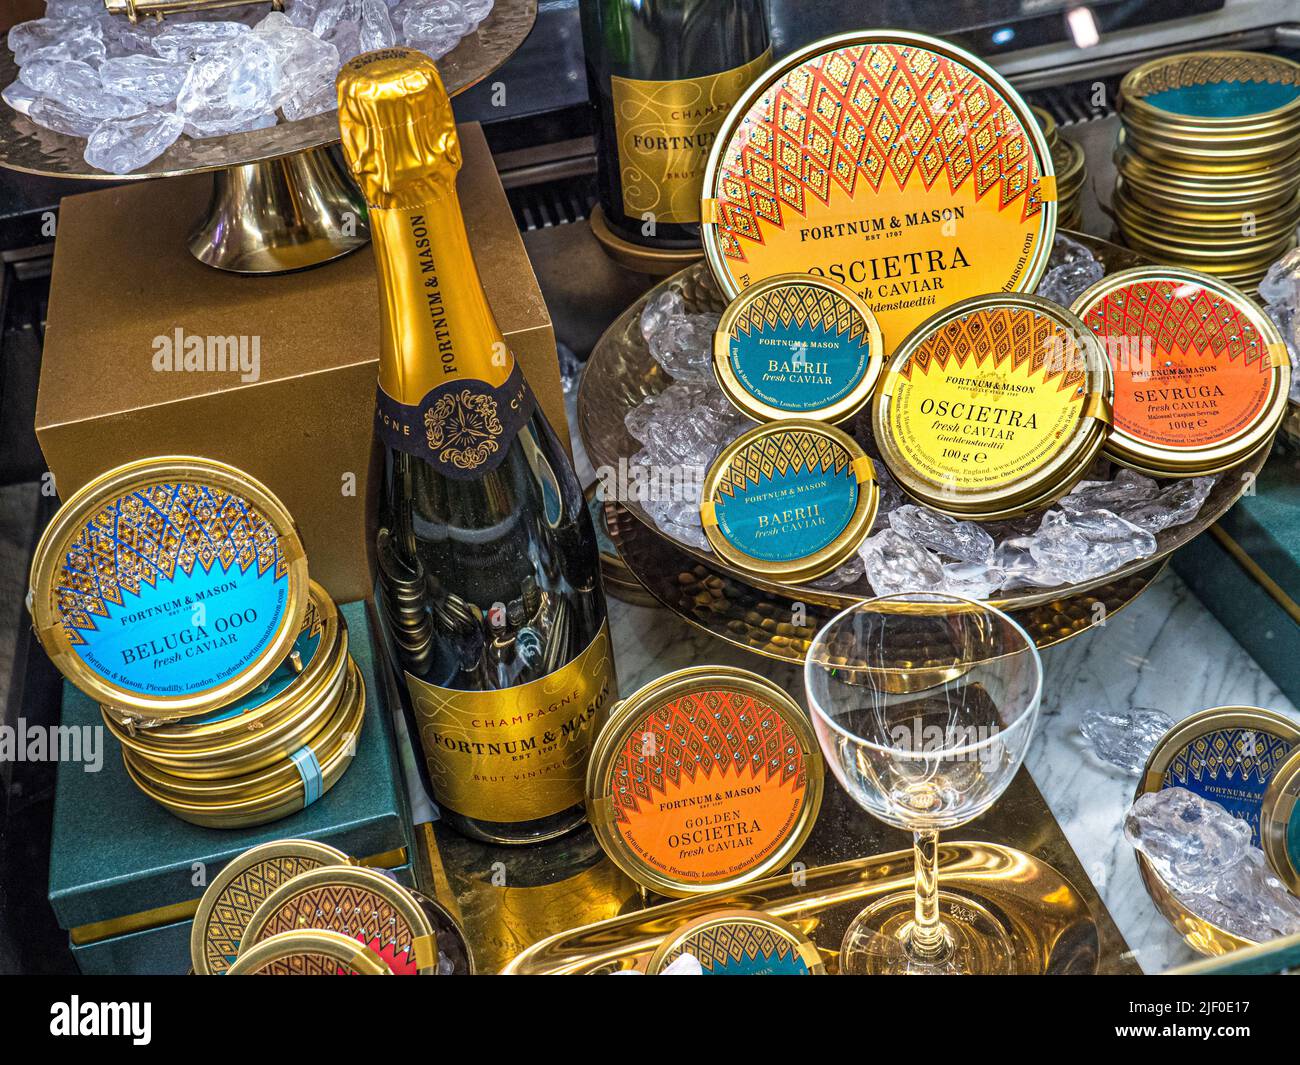 RUSSIAN CAVIAR CHAMPAGNE ON SALE DISPLAY Fortnum & Mason Food Hall with cabinet display of Fortnum branded Caviar varieties Beluga Oscietra Sevruga, Stock Photo